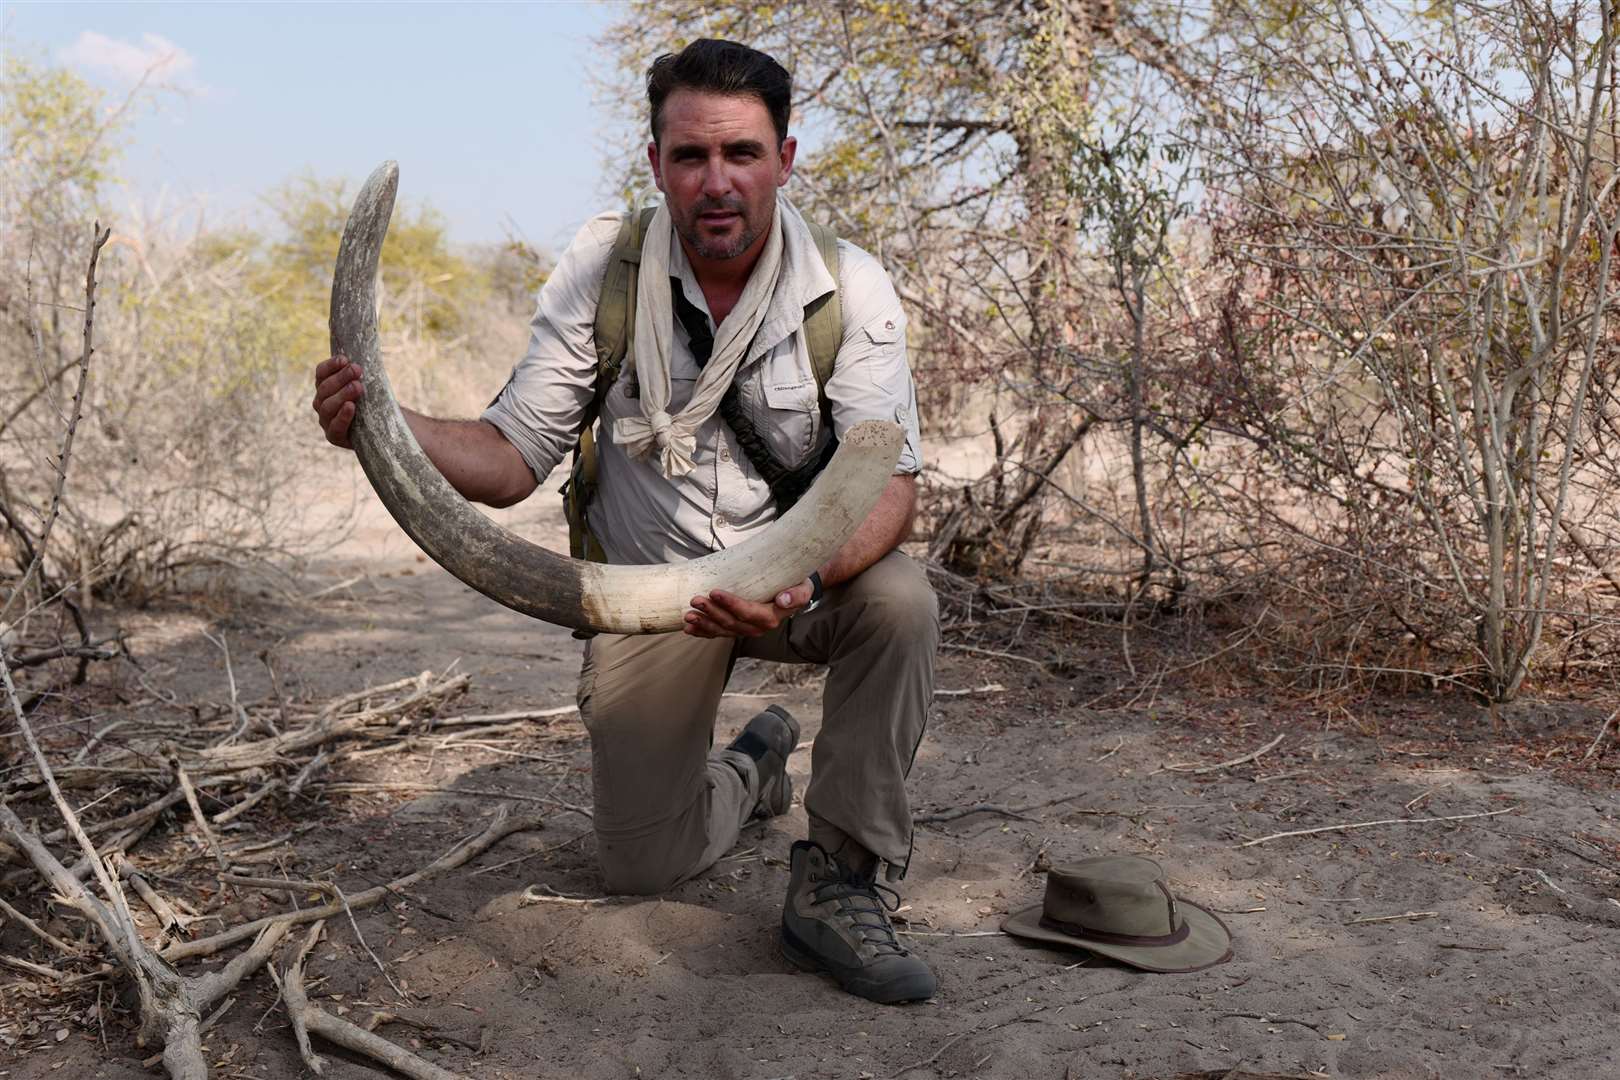 Levison Wood with an elephant tusk in Botswana. Picture: PA Photo/Simon Buxton